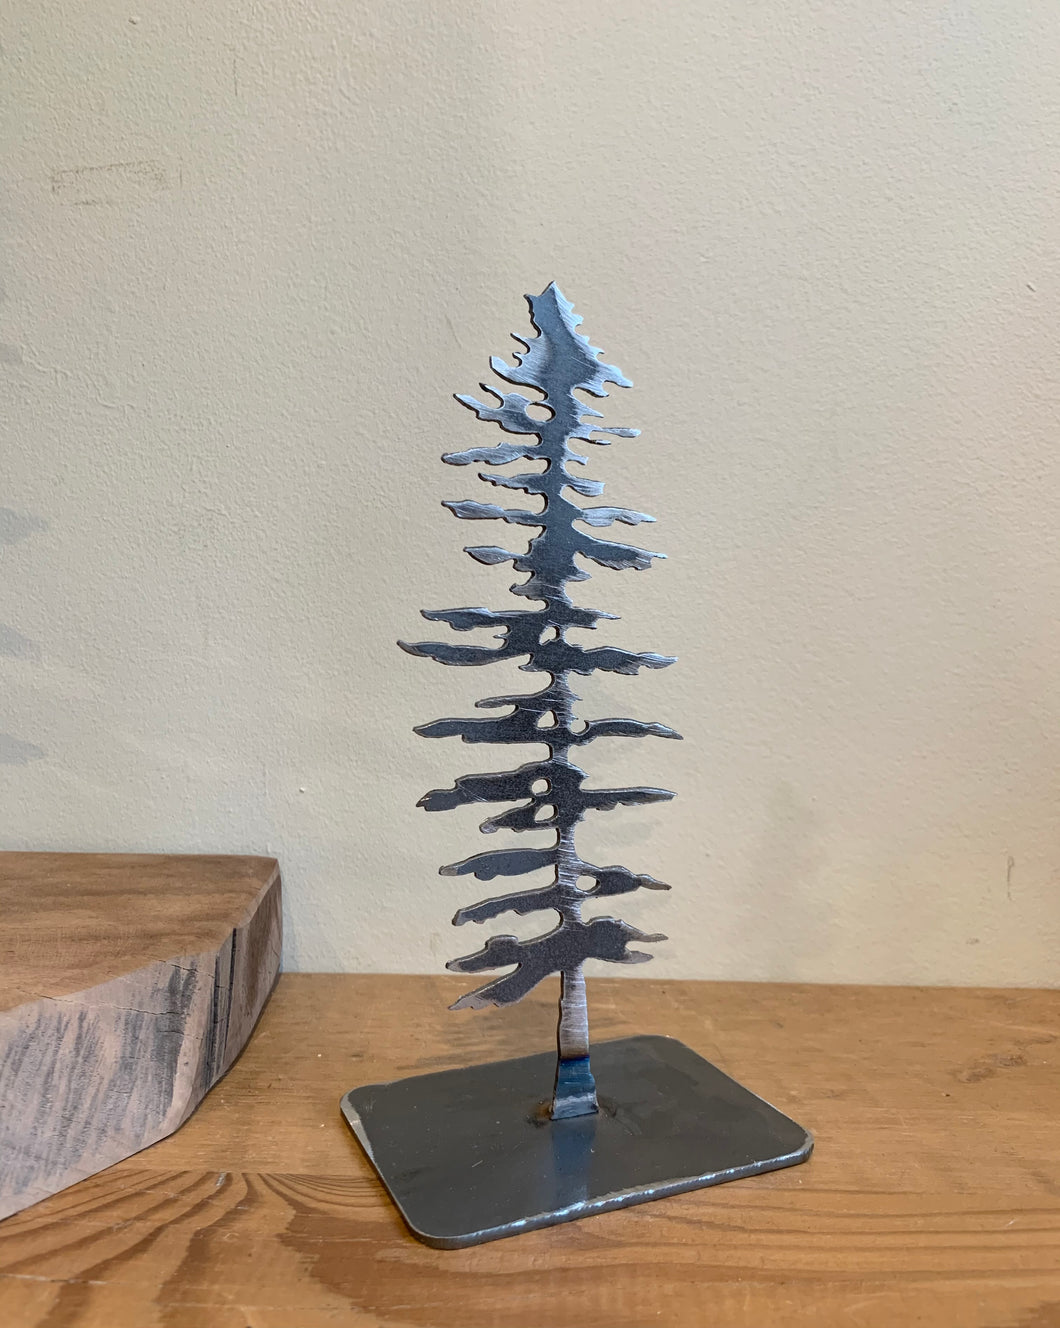 Reclaimed Metal Sculptures - Trees